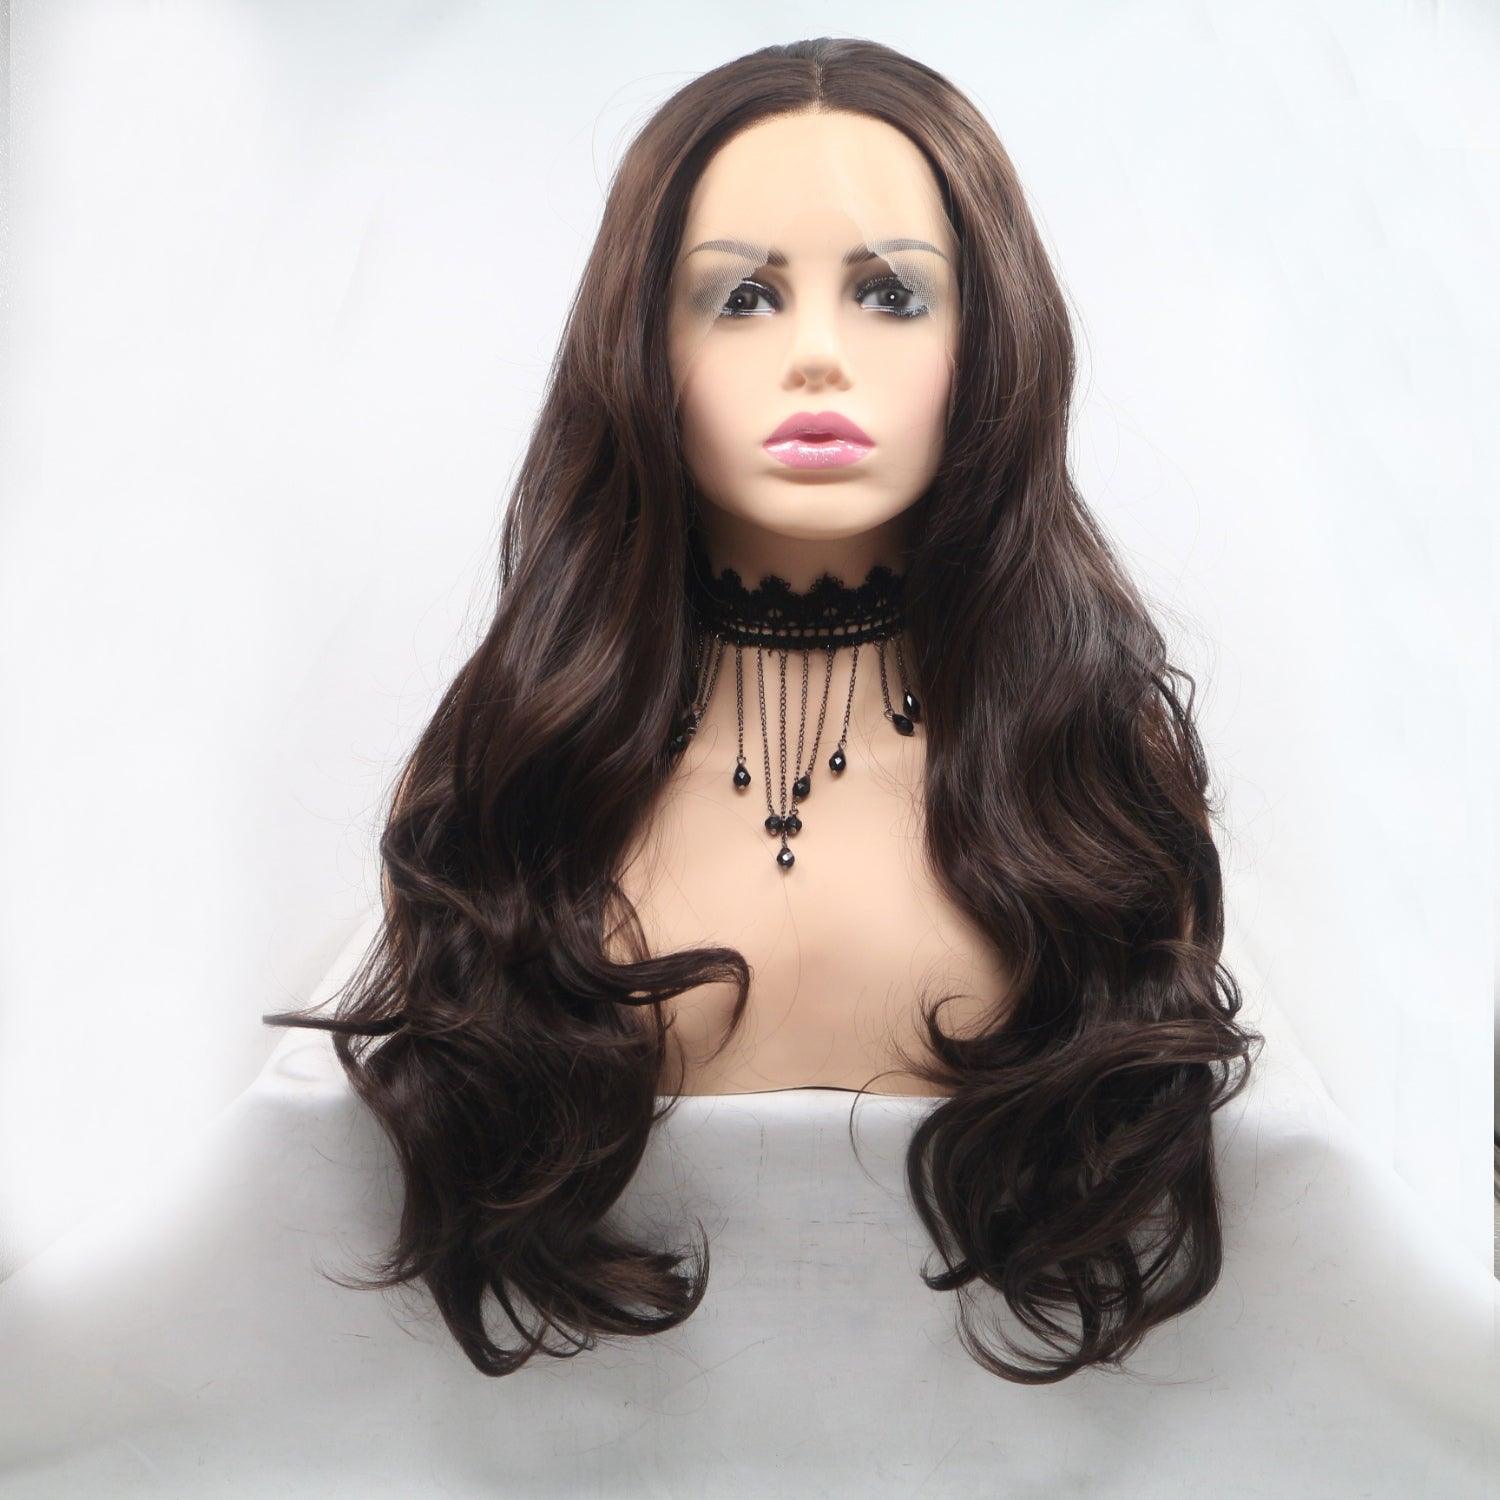 a mannequin head with long dark brown hair